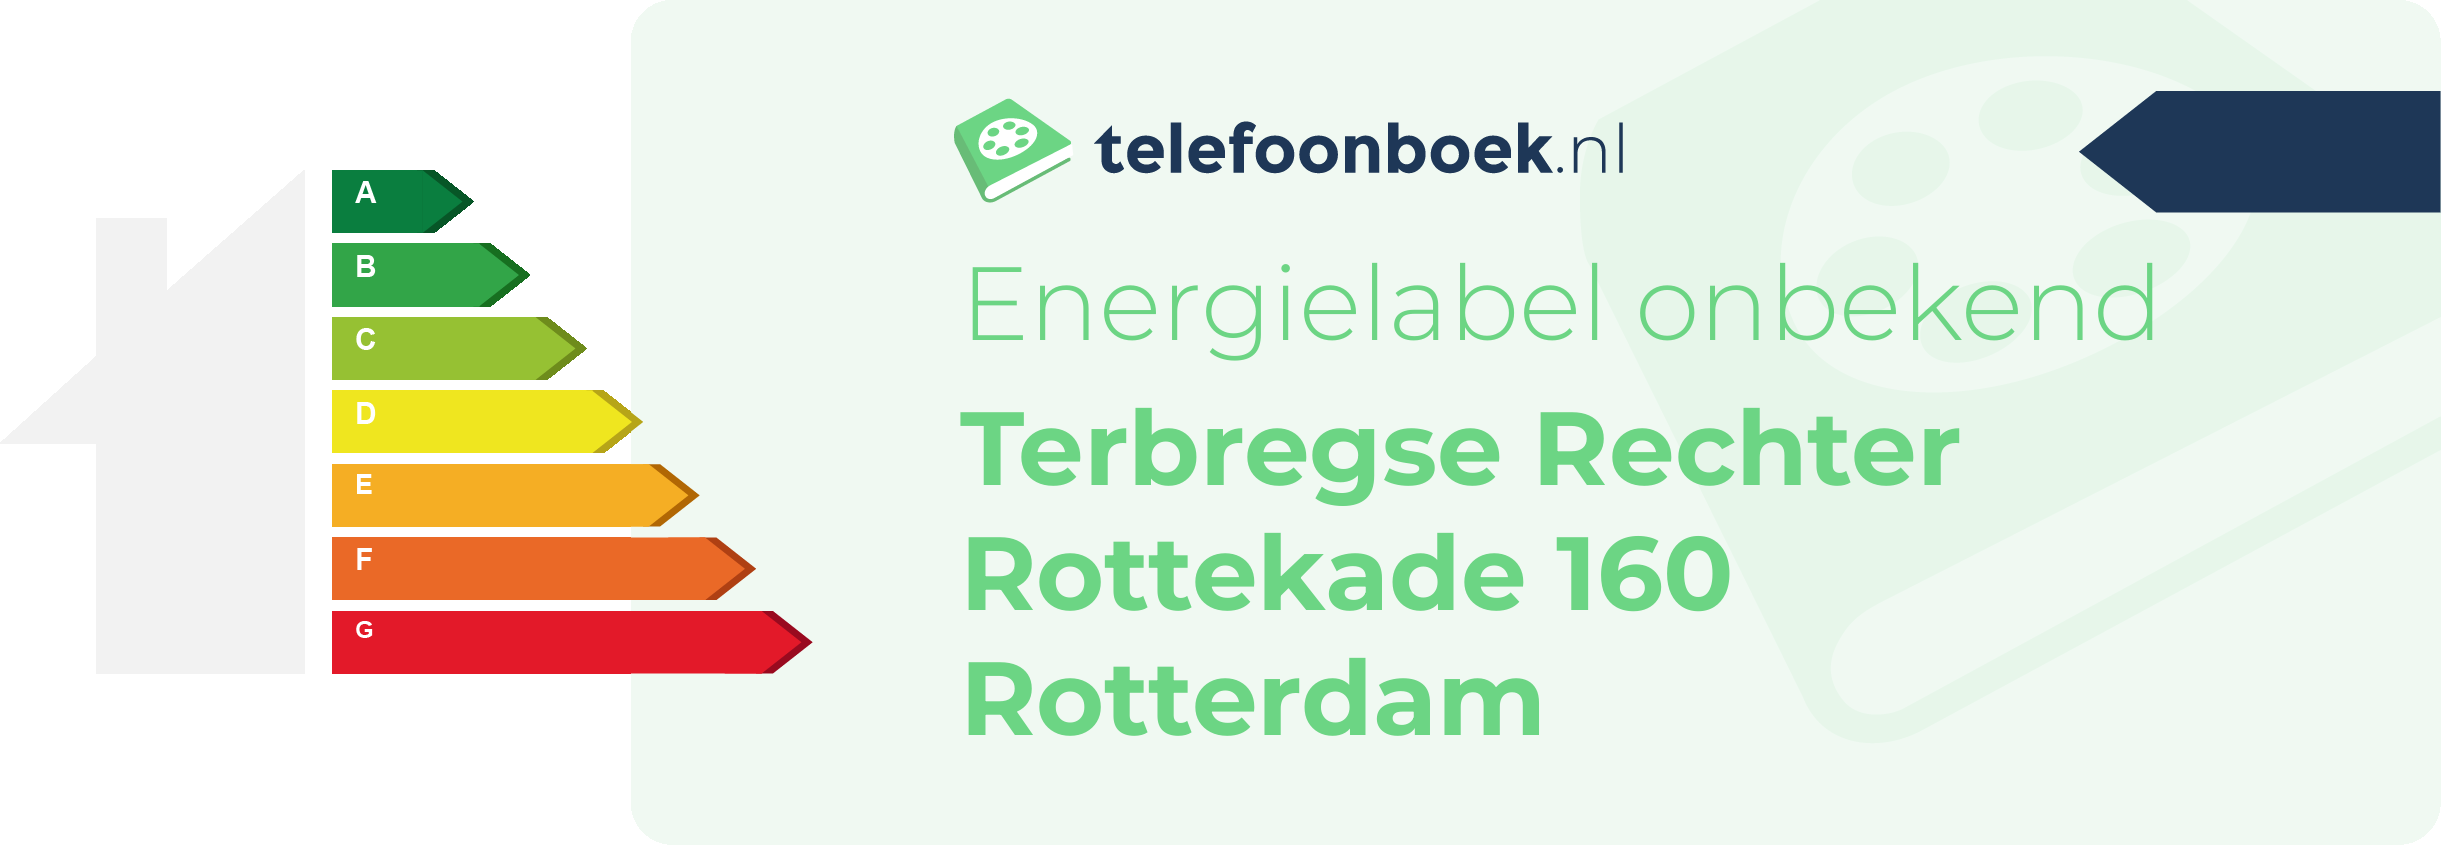 Energielabel Terbregse Rechter Rottekade 160 Rotterdam